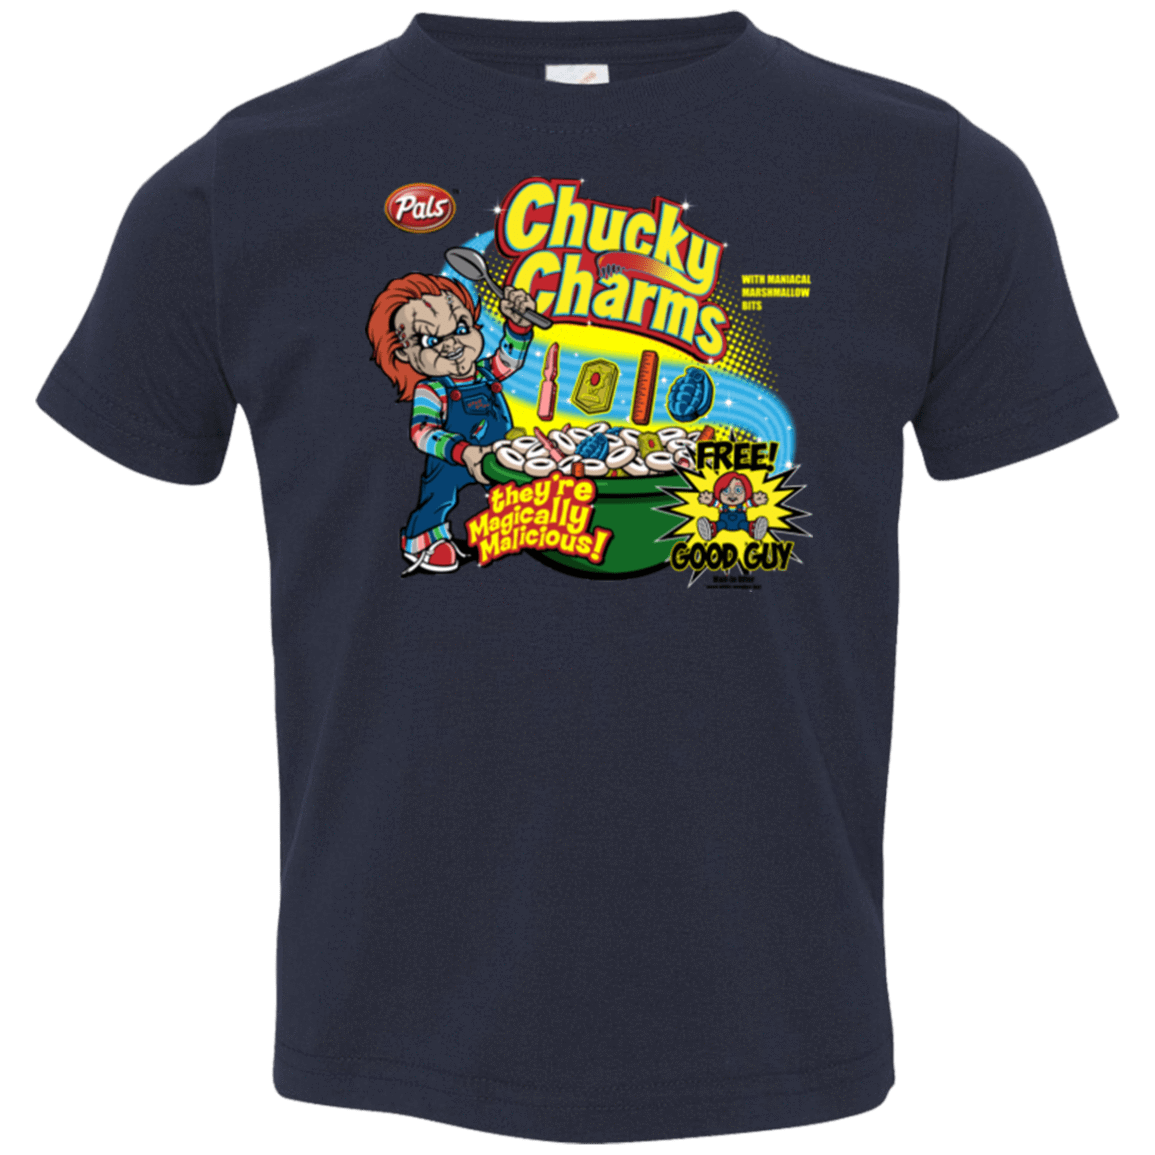 T-Shirts Navy / 2T Chucky Charms Toddler Premium T-Shirt